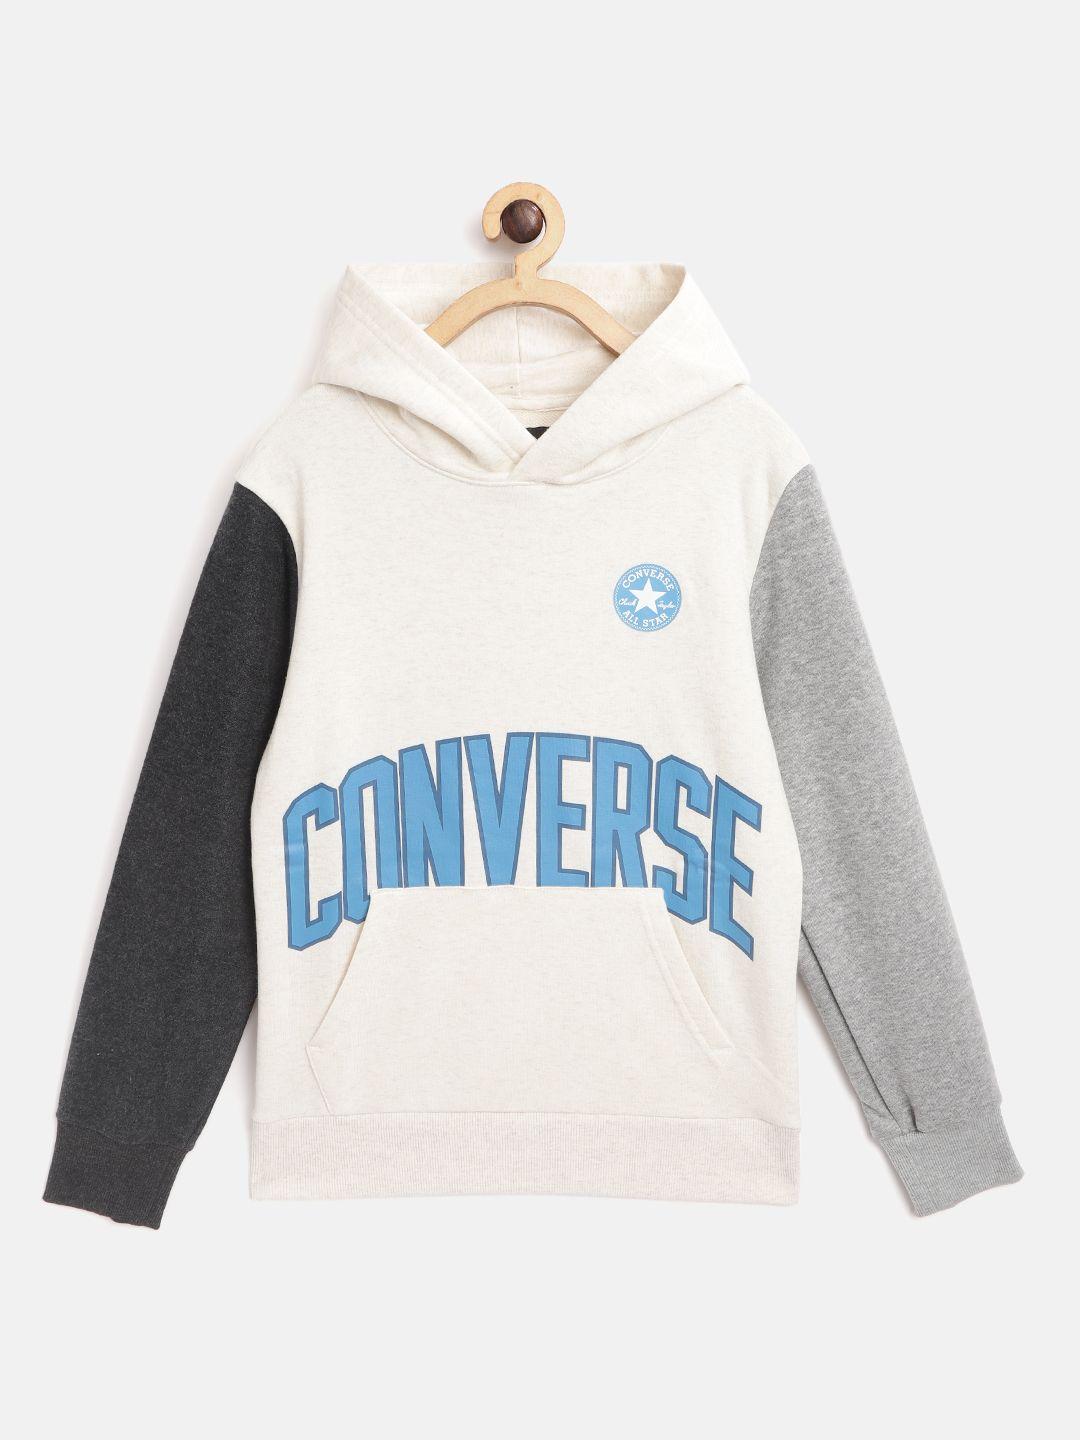 converse boys off-white & blue brand logo print hooded sweatshirt